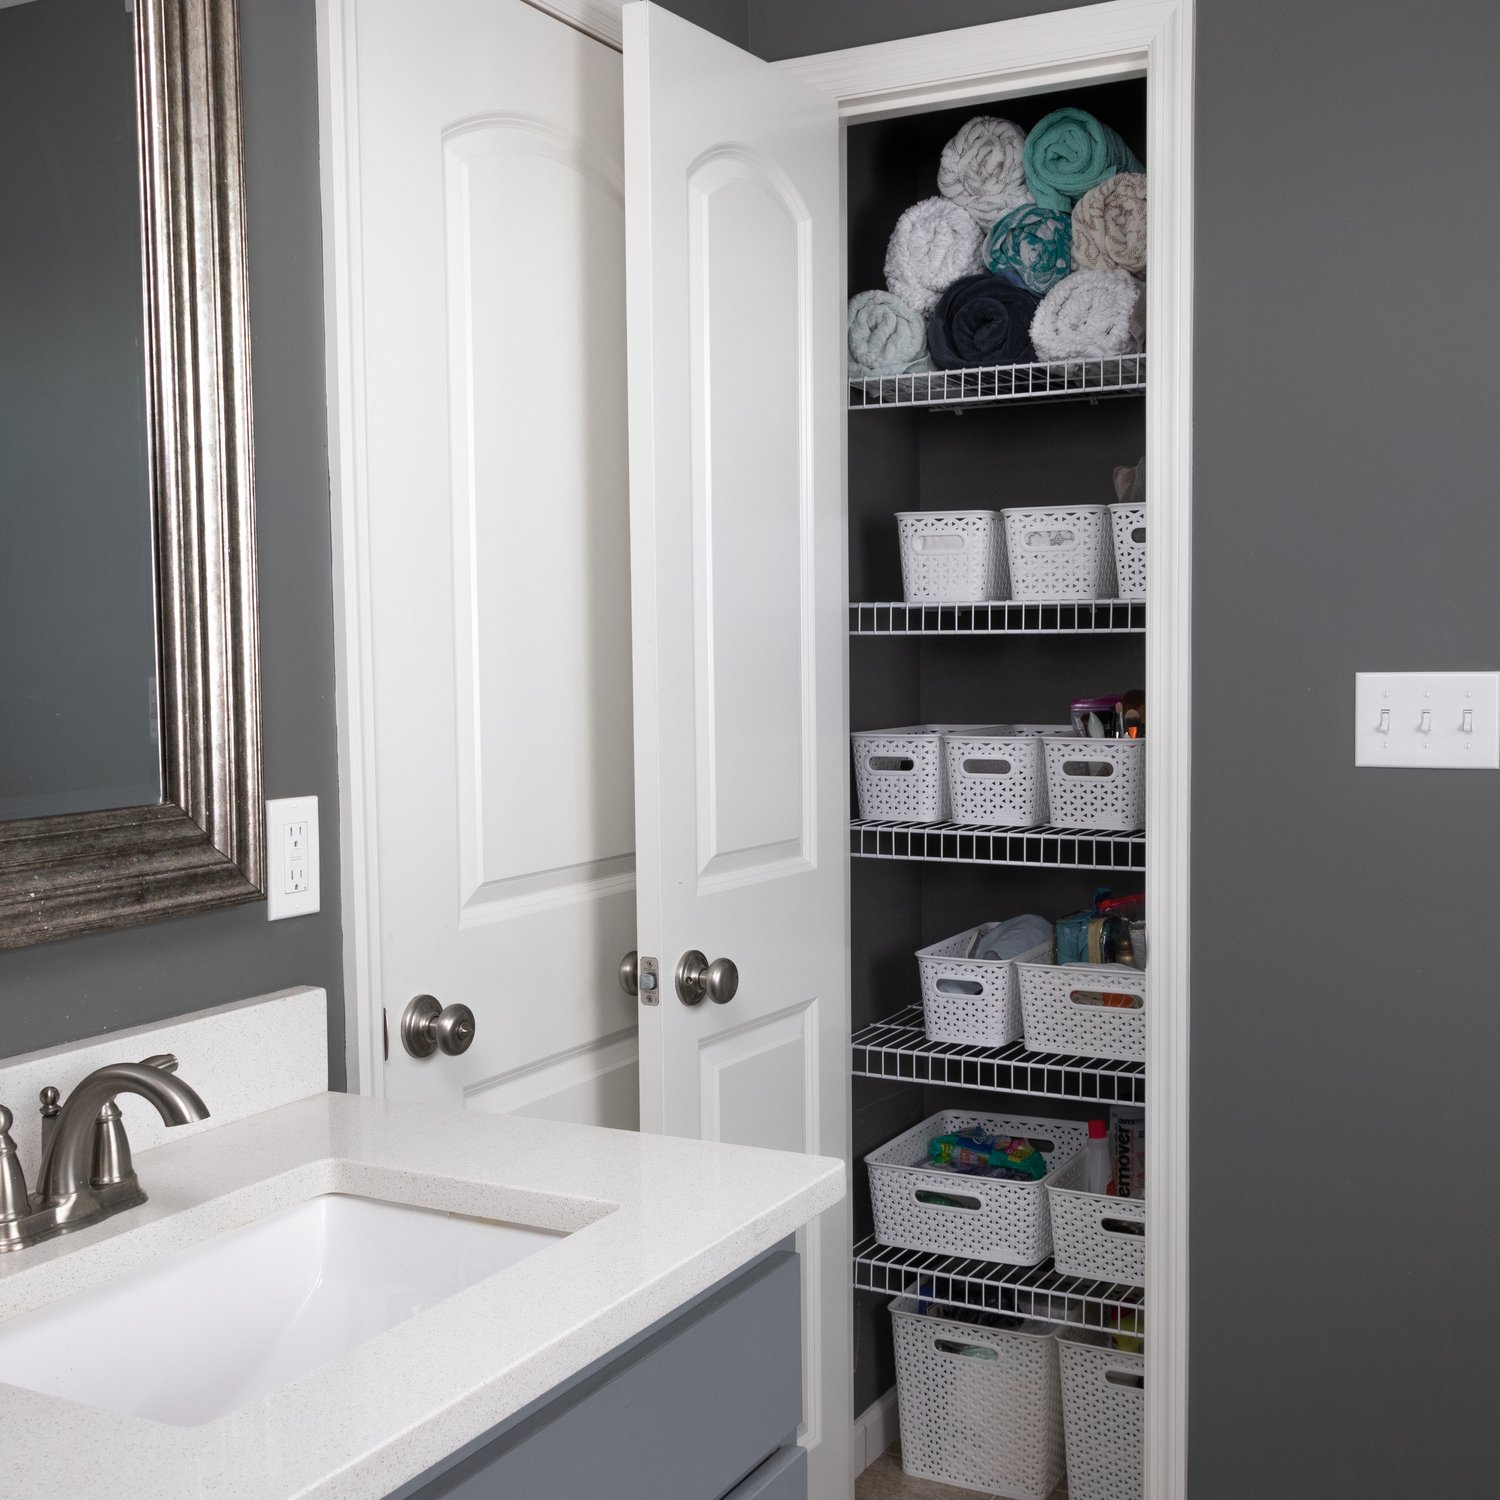 How to Organize a Bathroom Closet · Chatfield Court